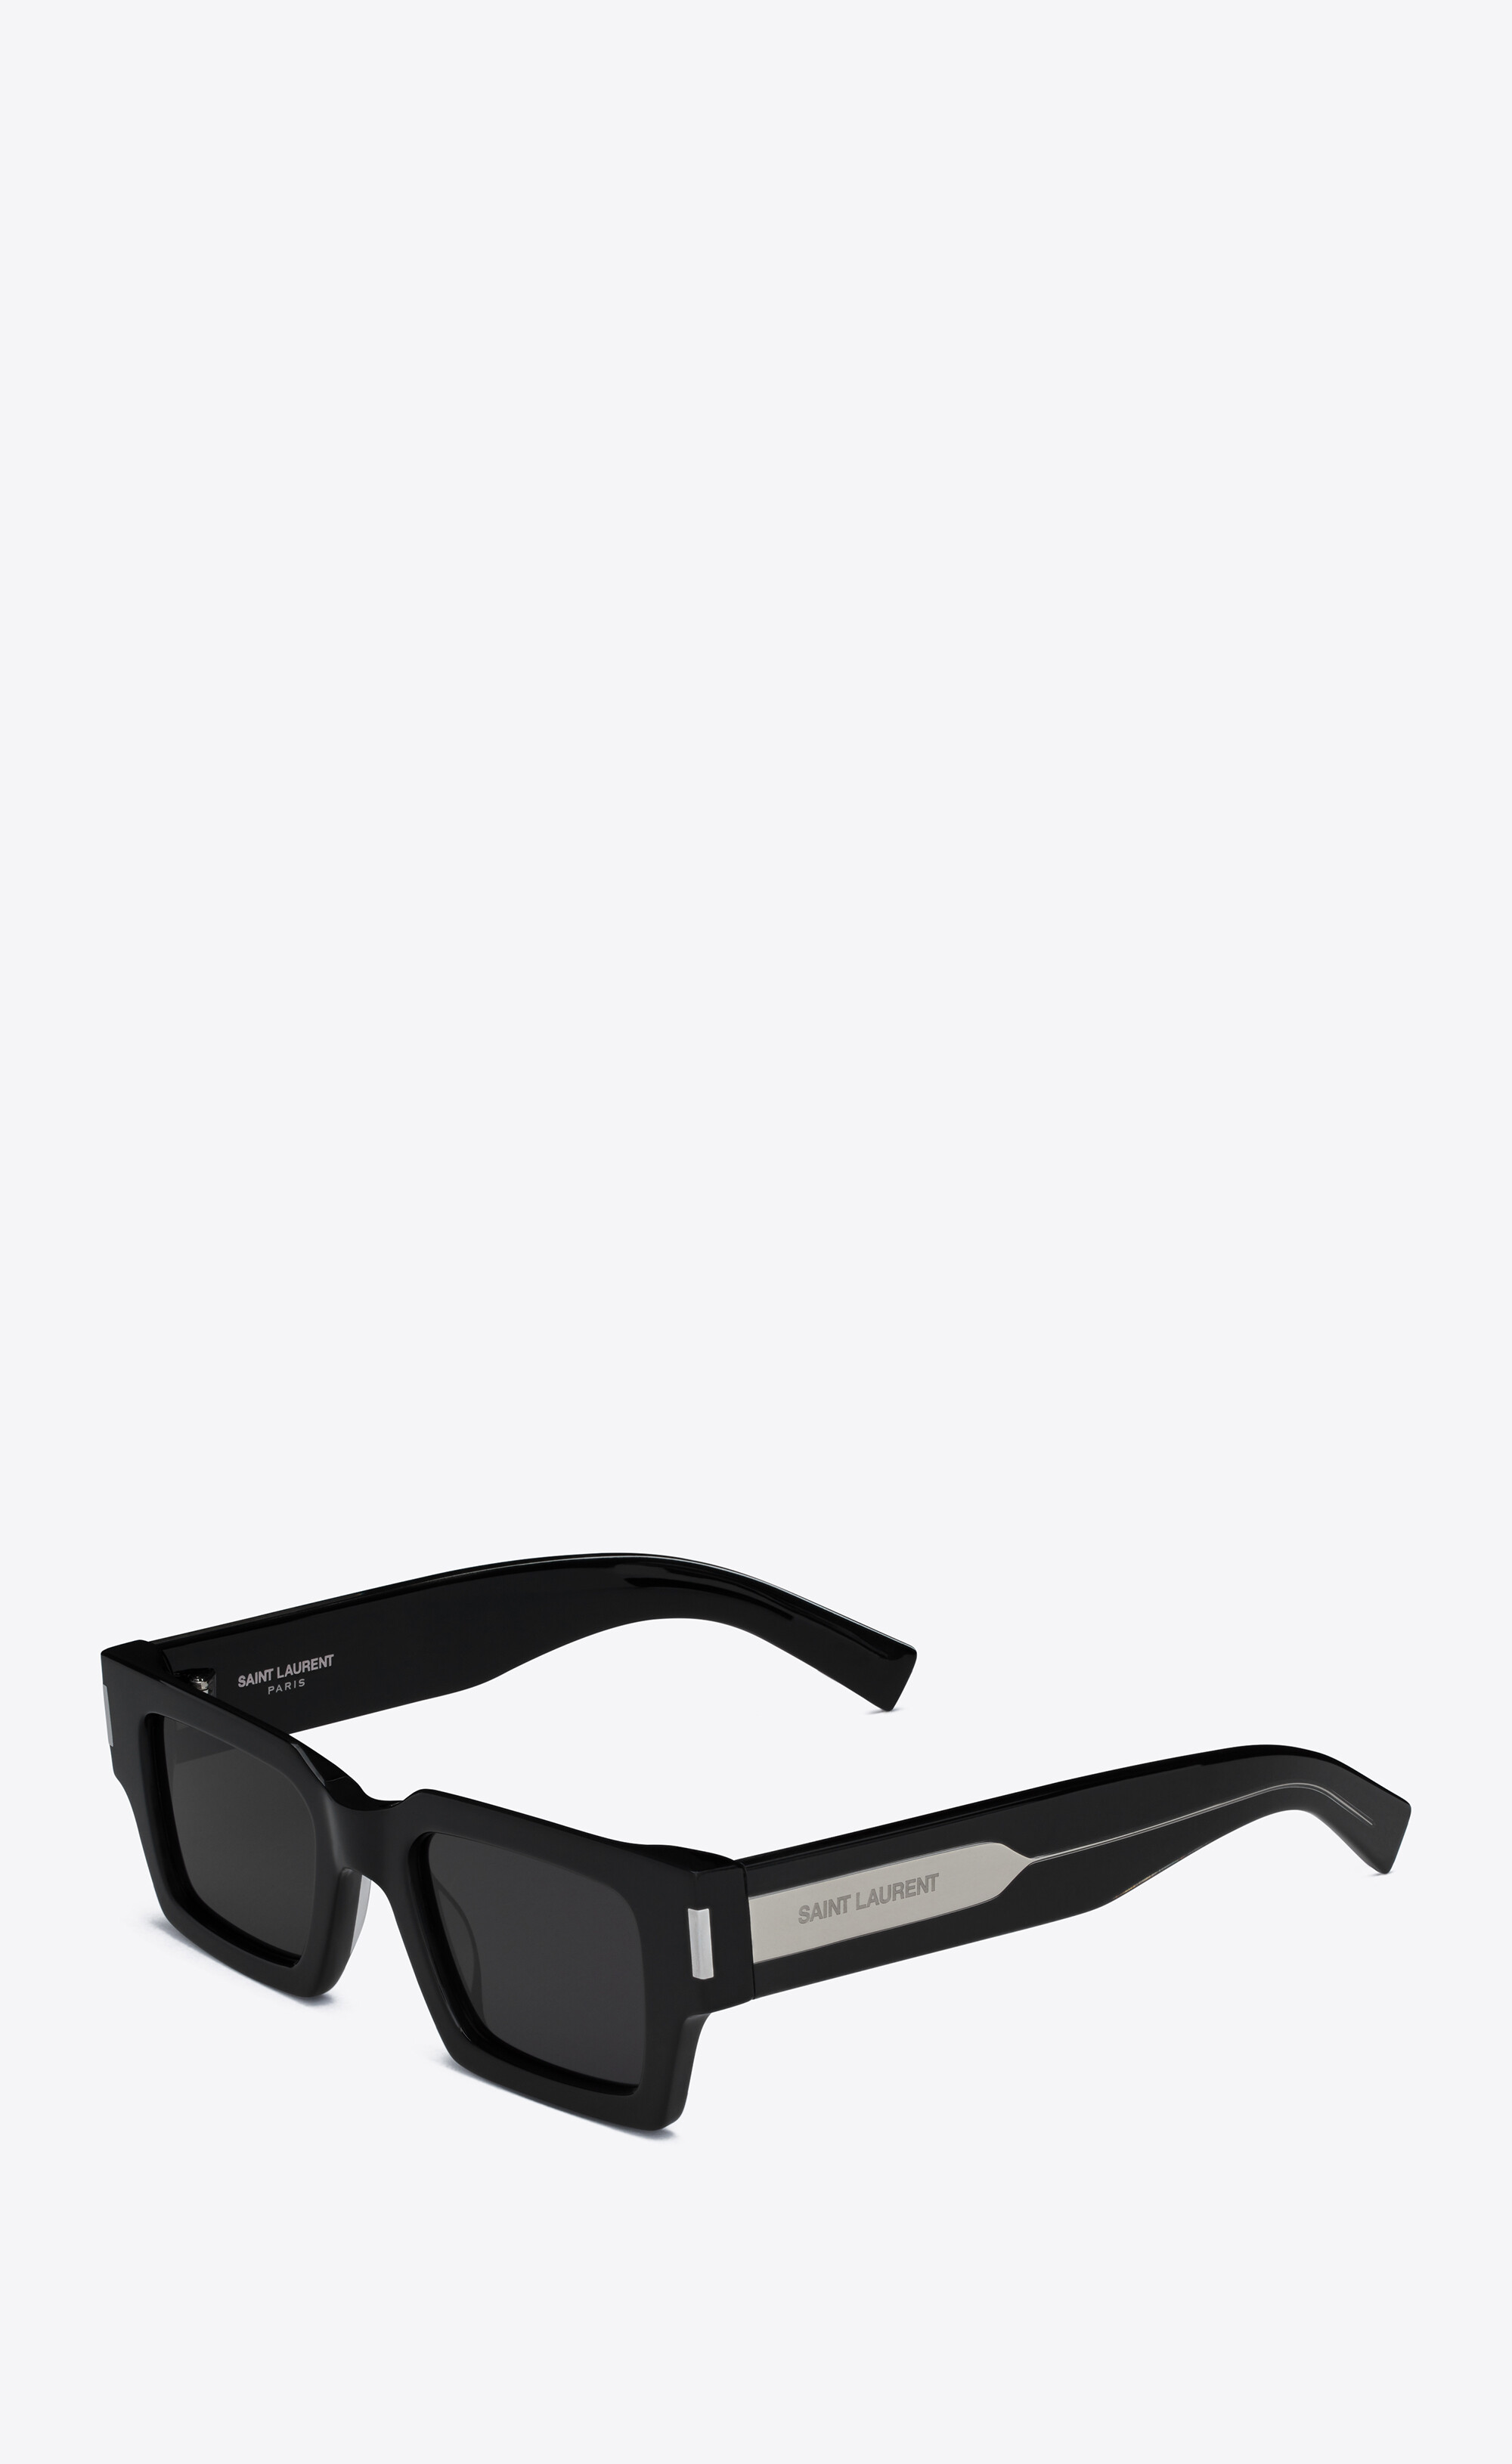 Yves Saint Laurent SL 572 001 50 22 sunglasses